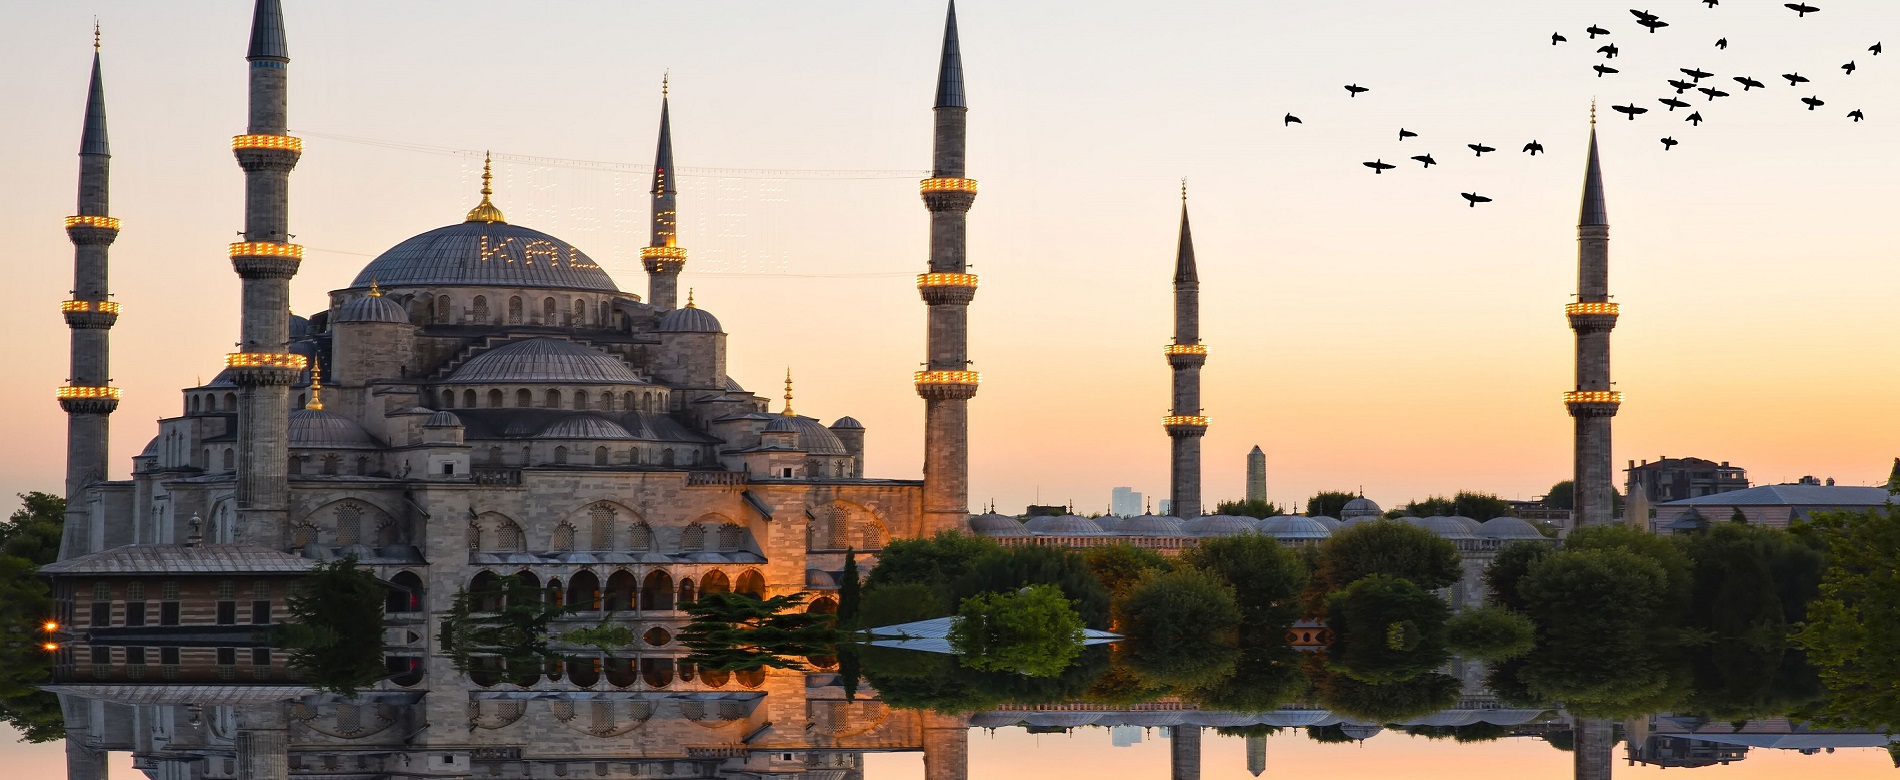 Vista de la Mezquita Azul de Estambul con sus seis minaretes.